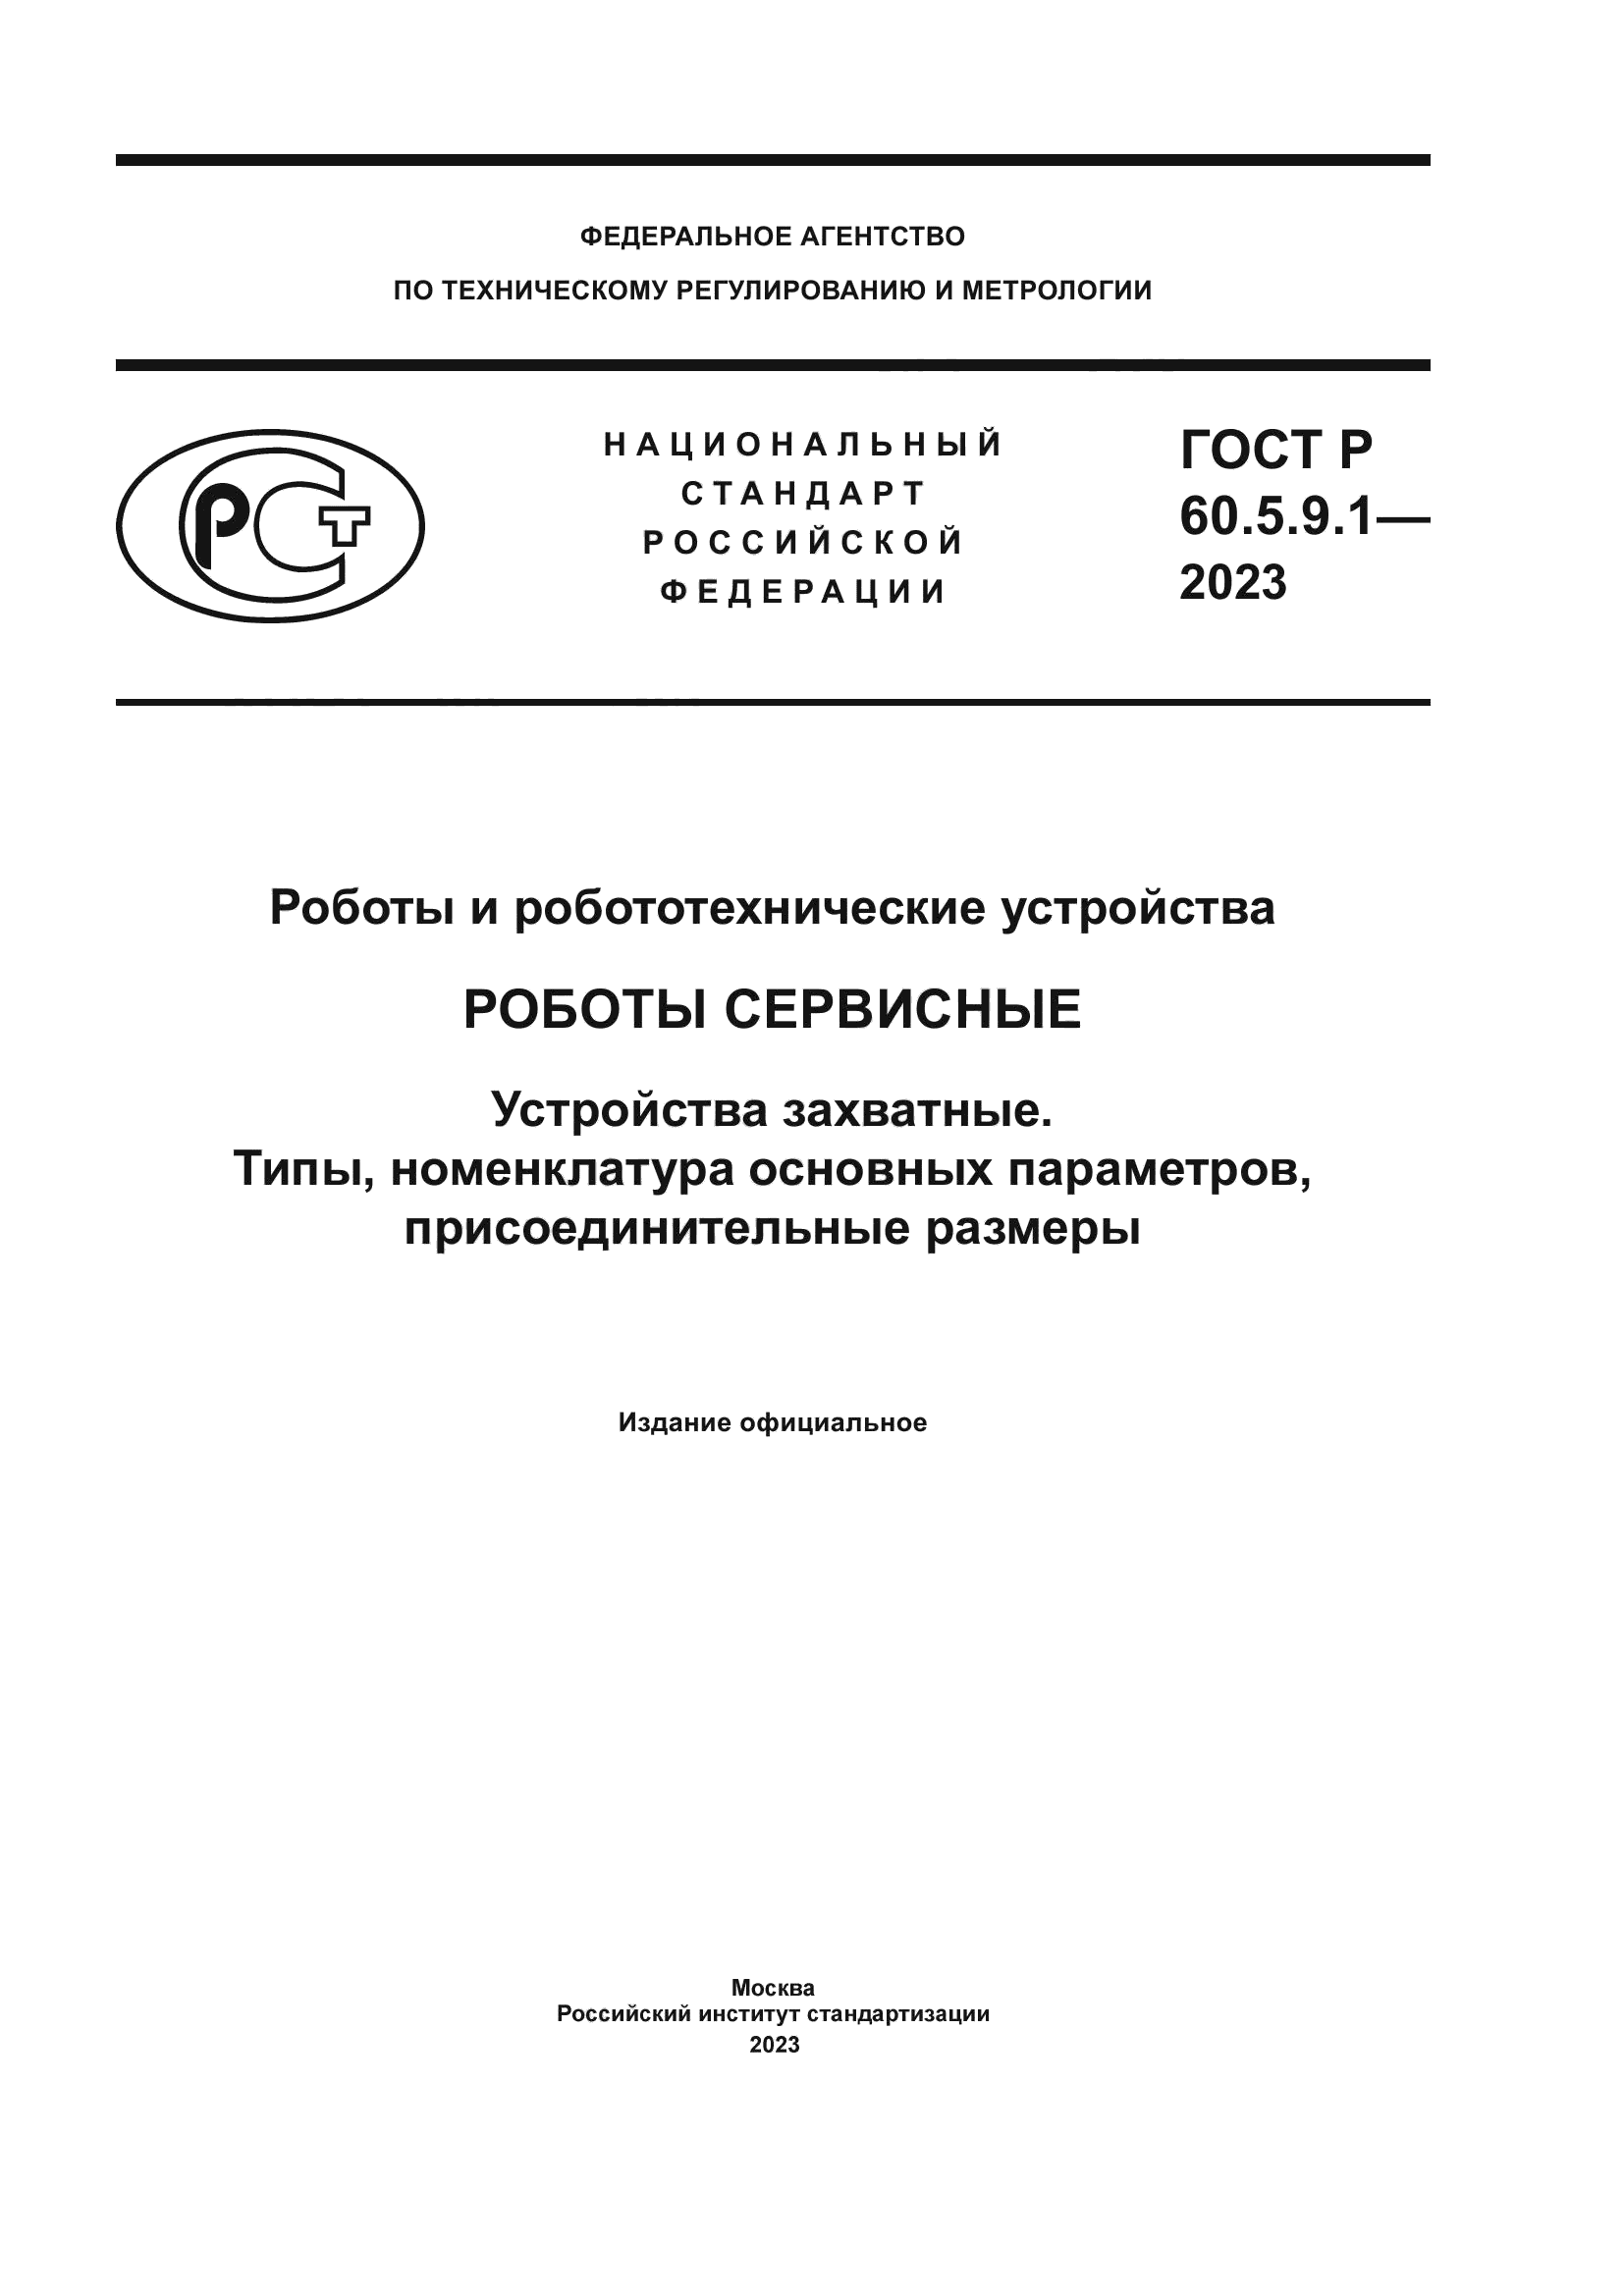 ГОСТ Р 60.5.9.1-2023